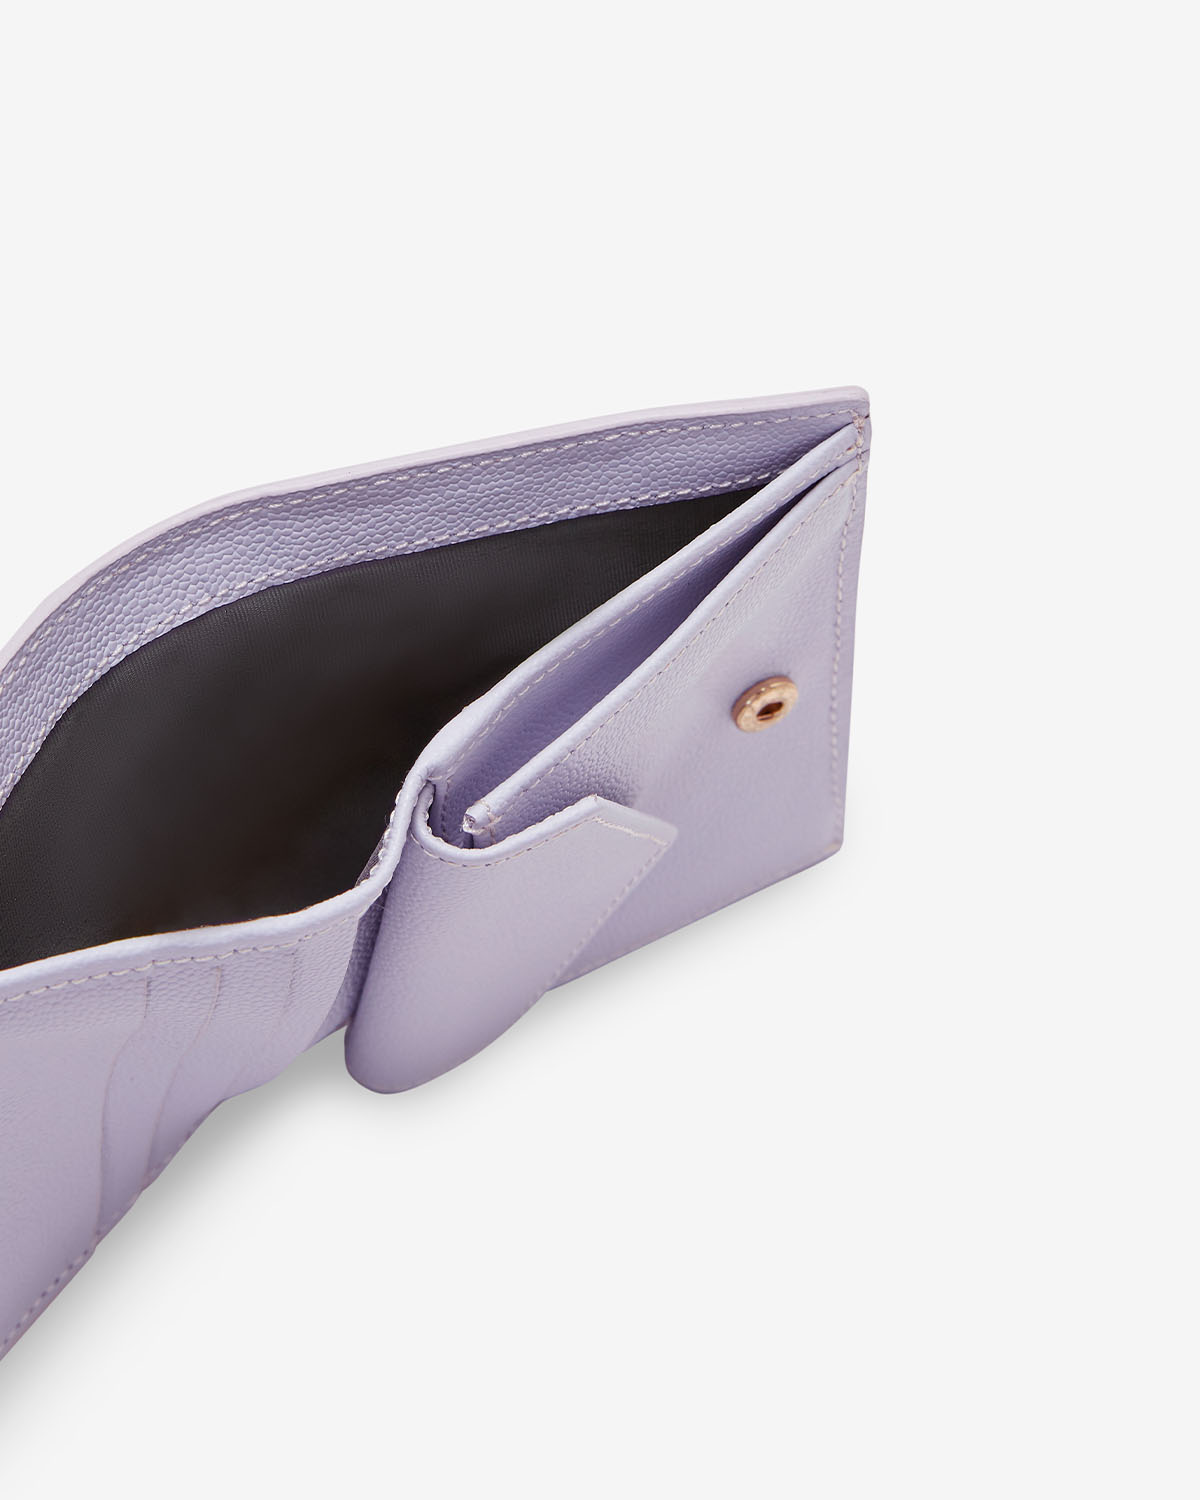 VERA CAVIAR Petite Wallet in Light Lavender กระเป๋าสตางค์แบบ 2 ทบ ทำจากหนังแท้ลาย Caviar สี Light Lavender